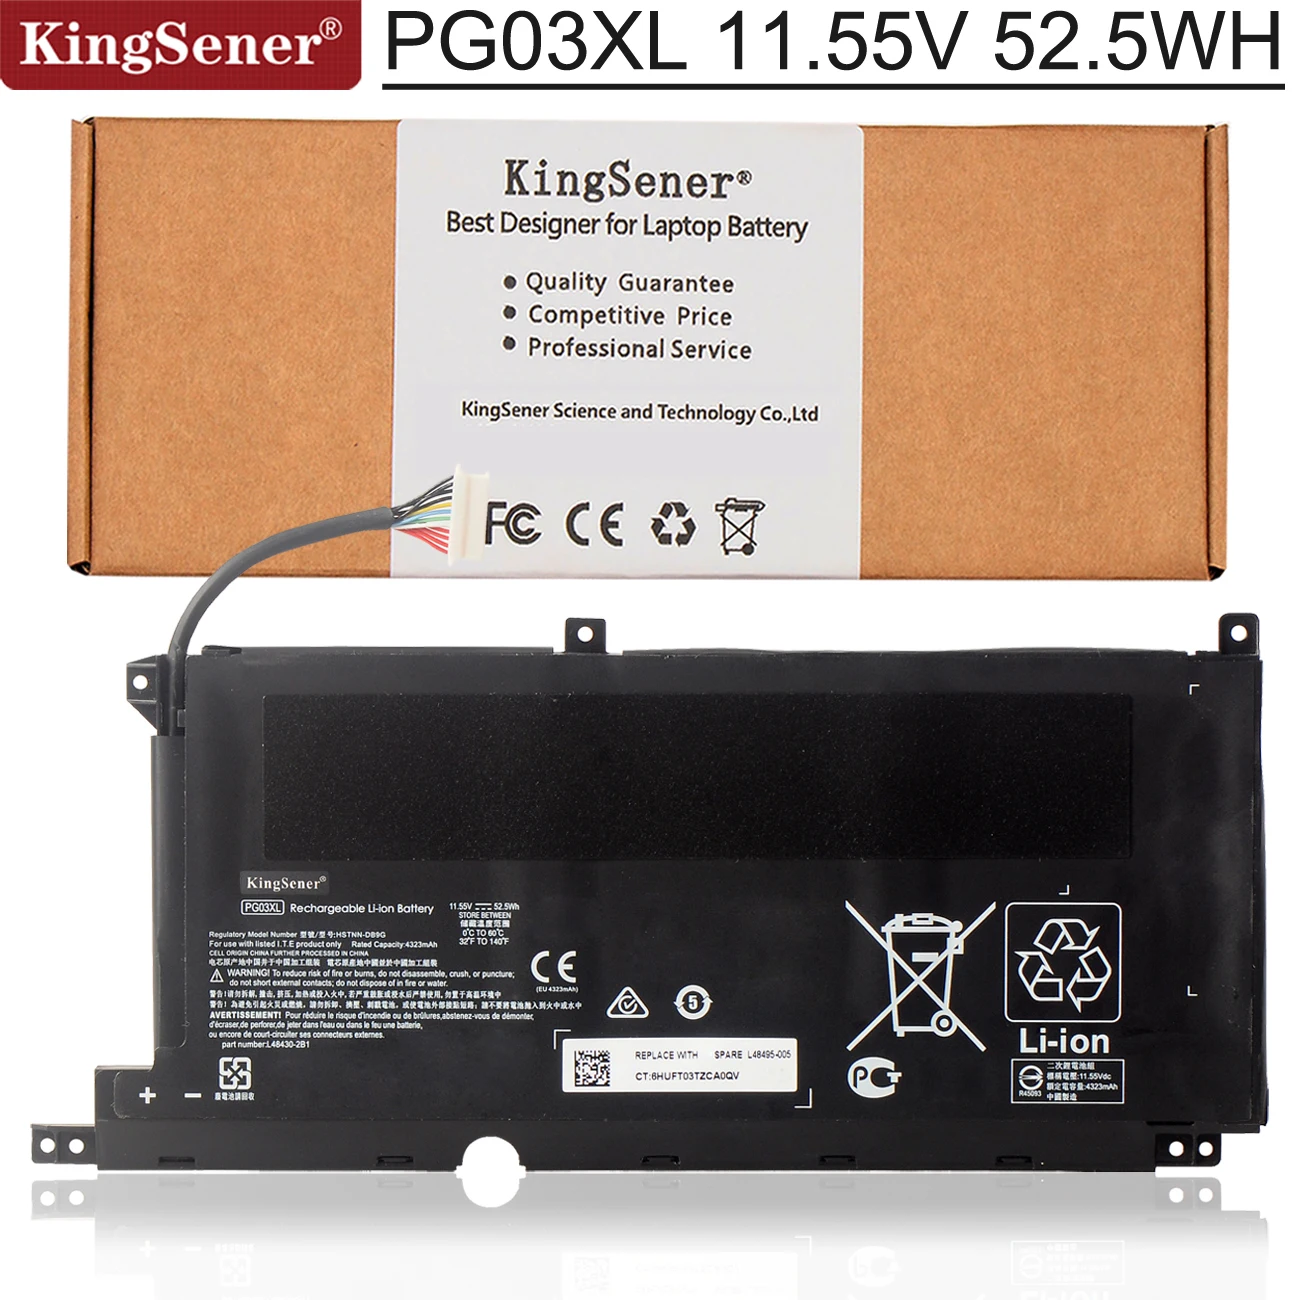 KingSener PG03XL Laptop Battery For HP Pavilion Gaming 15-DK dk0003nq 15-dk0020TX 15-ec 15-ec0000 OMEN 5X FPC52 Series 52.5WH